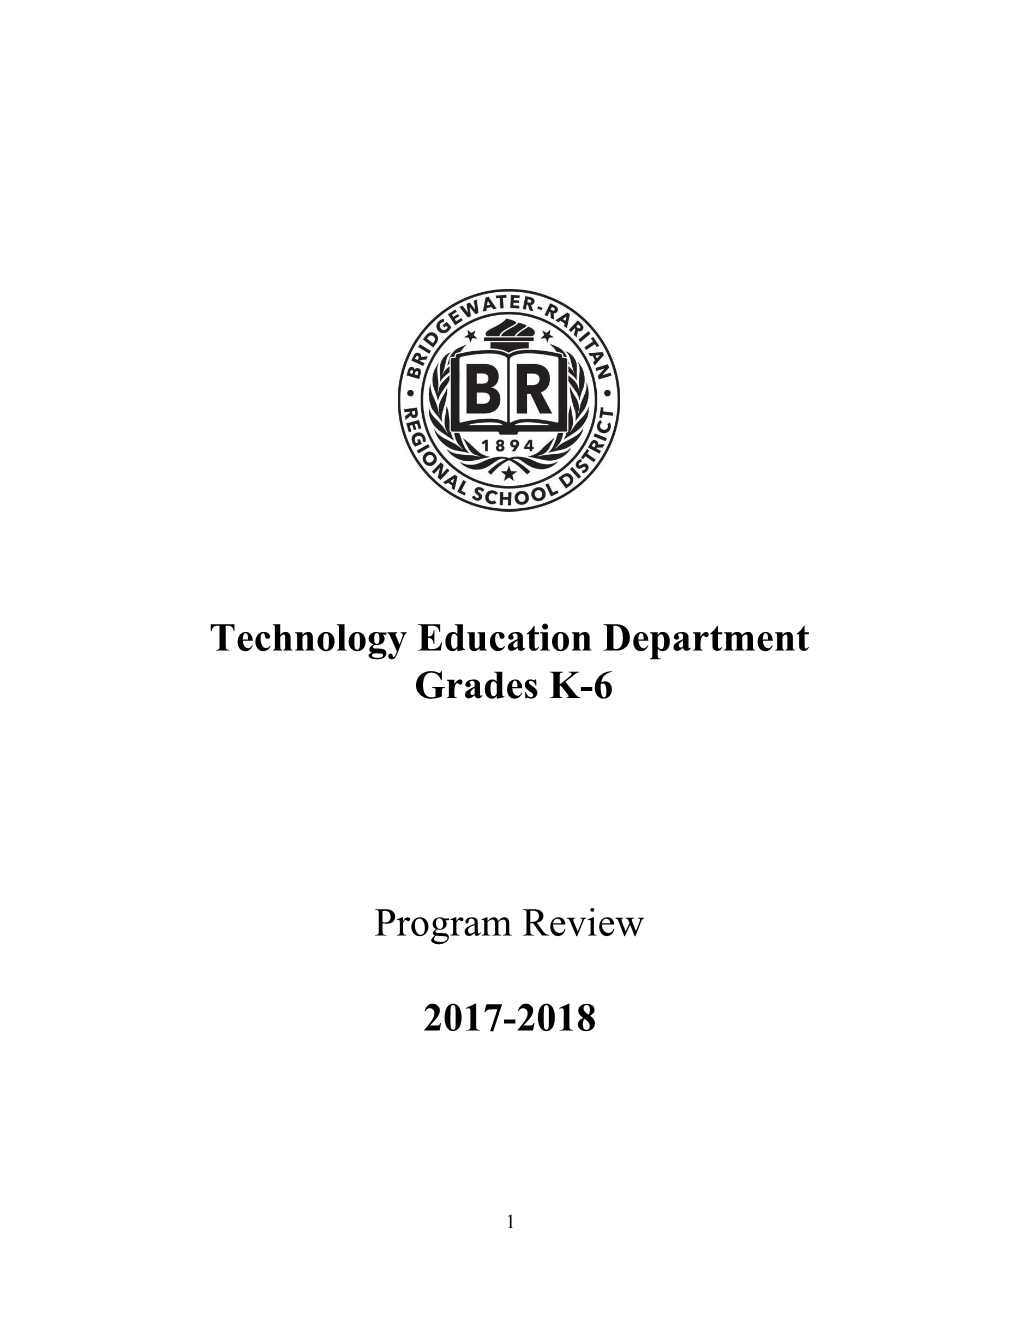 Technology Education Department Grades K-6 Program Review 2017